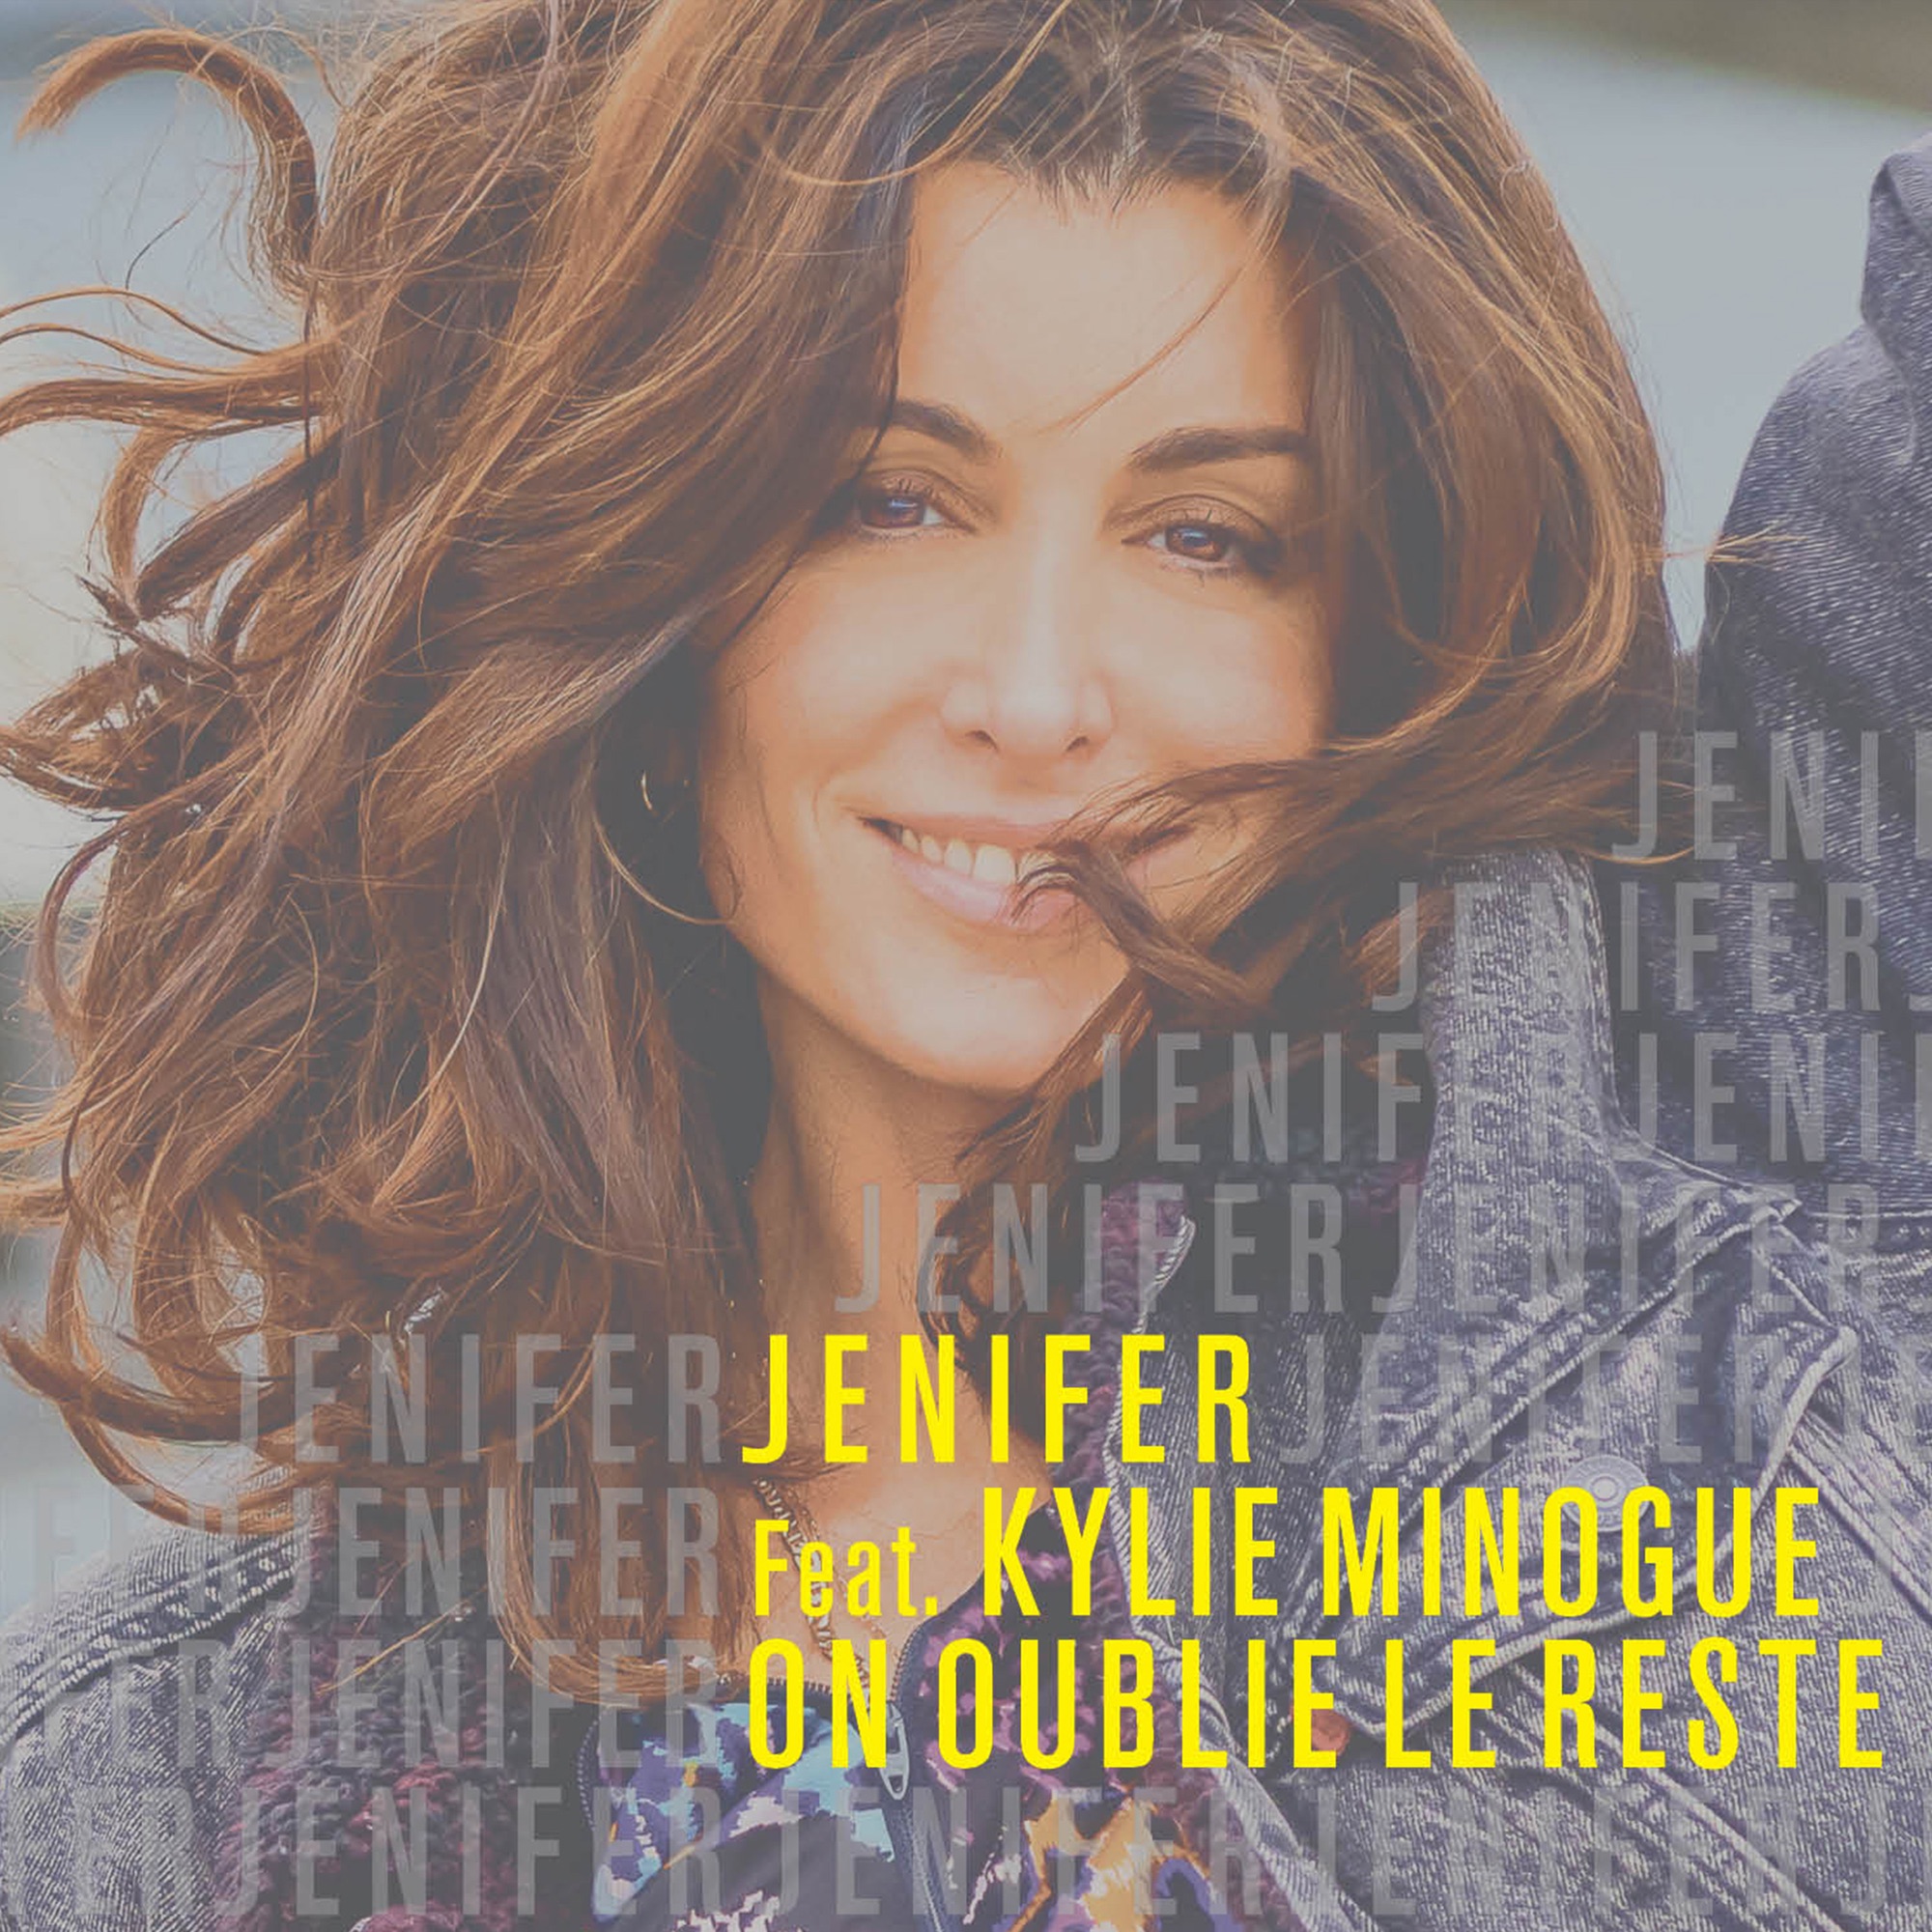 Jenifer featuring Kylie Minogue — On oublie le reste cover artwork